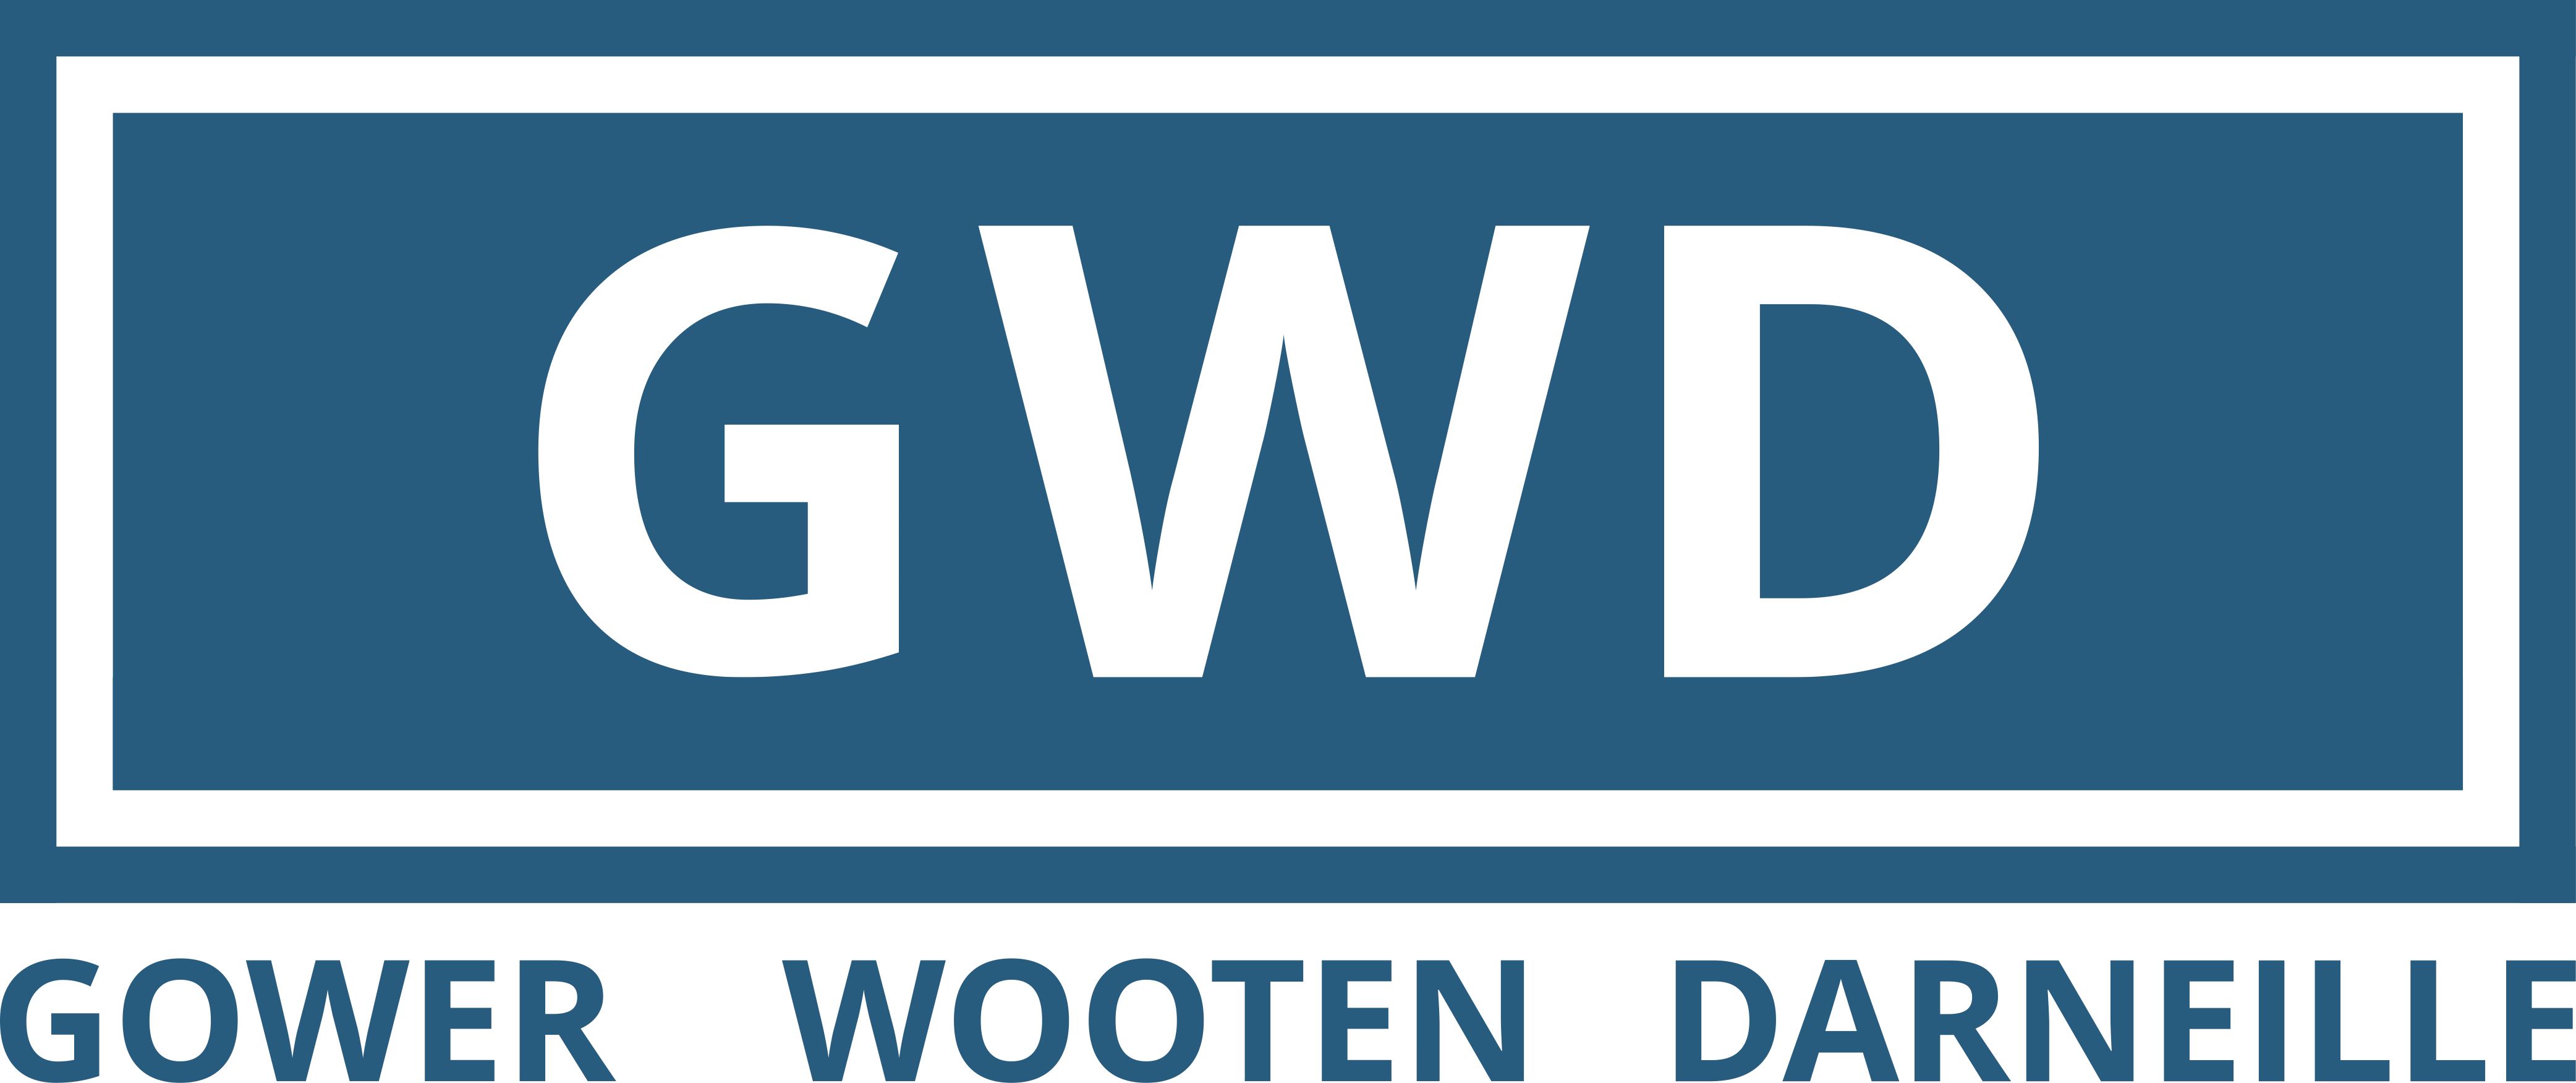 Gower Wooten Darneille logo